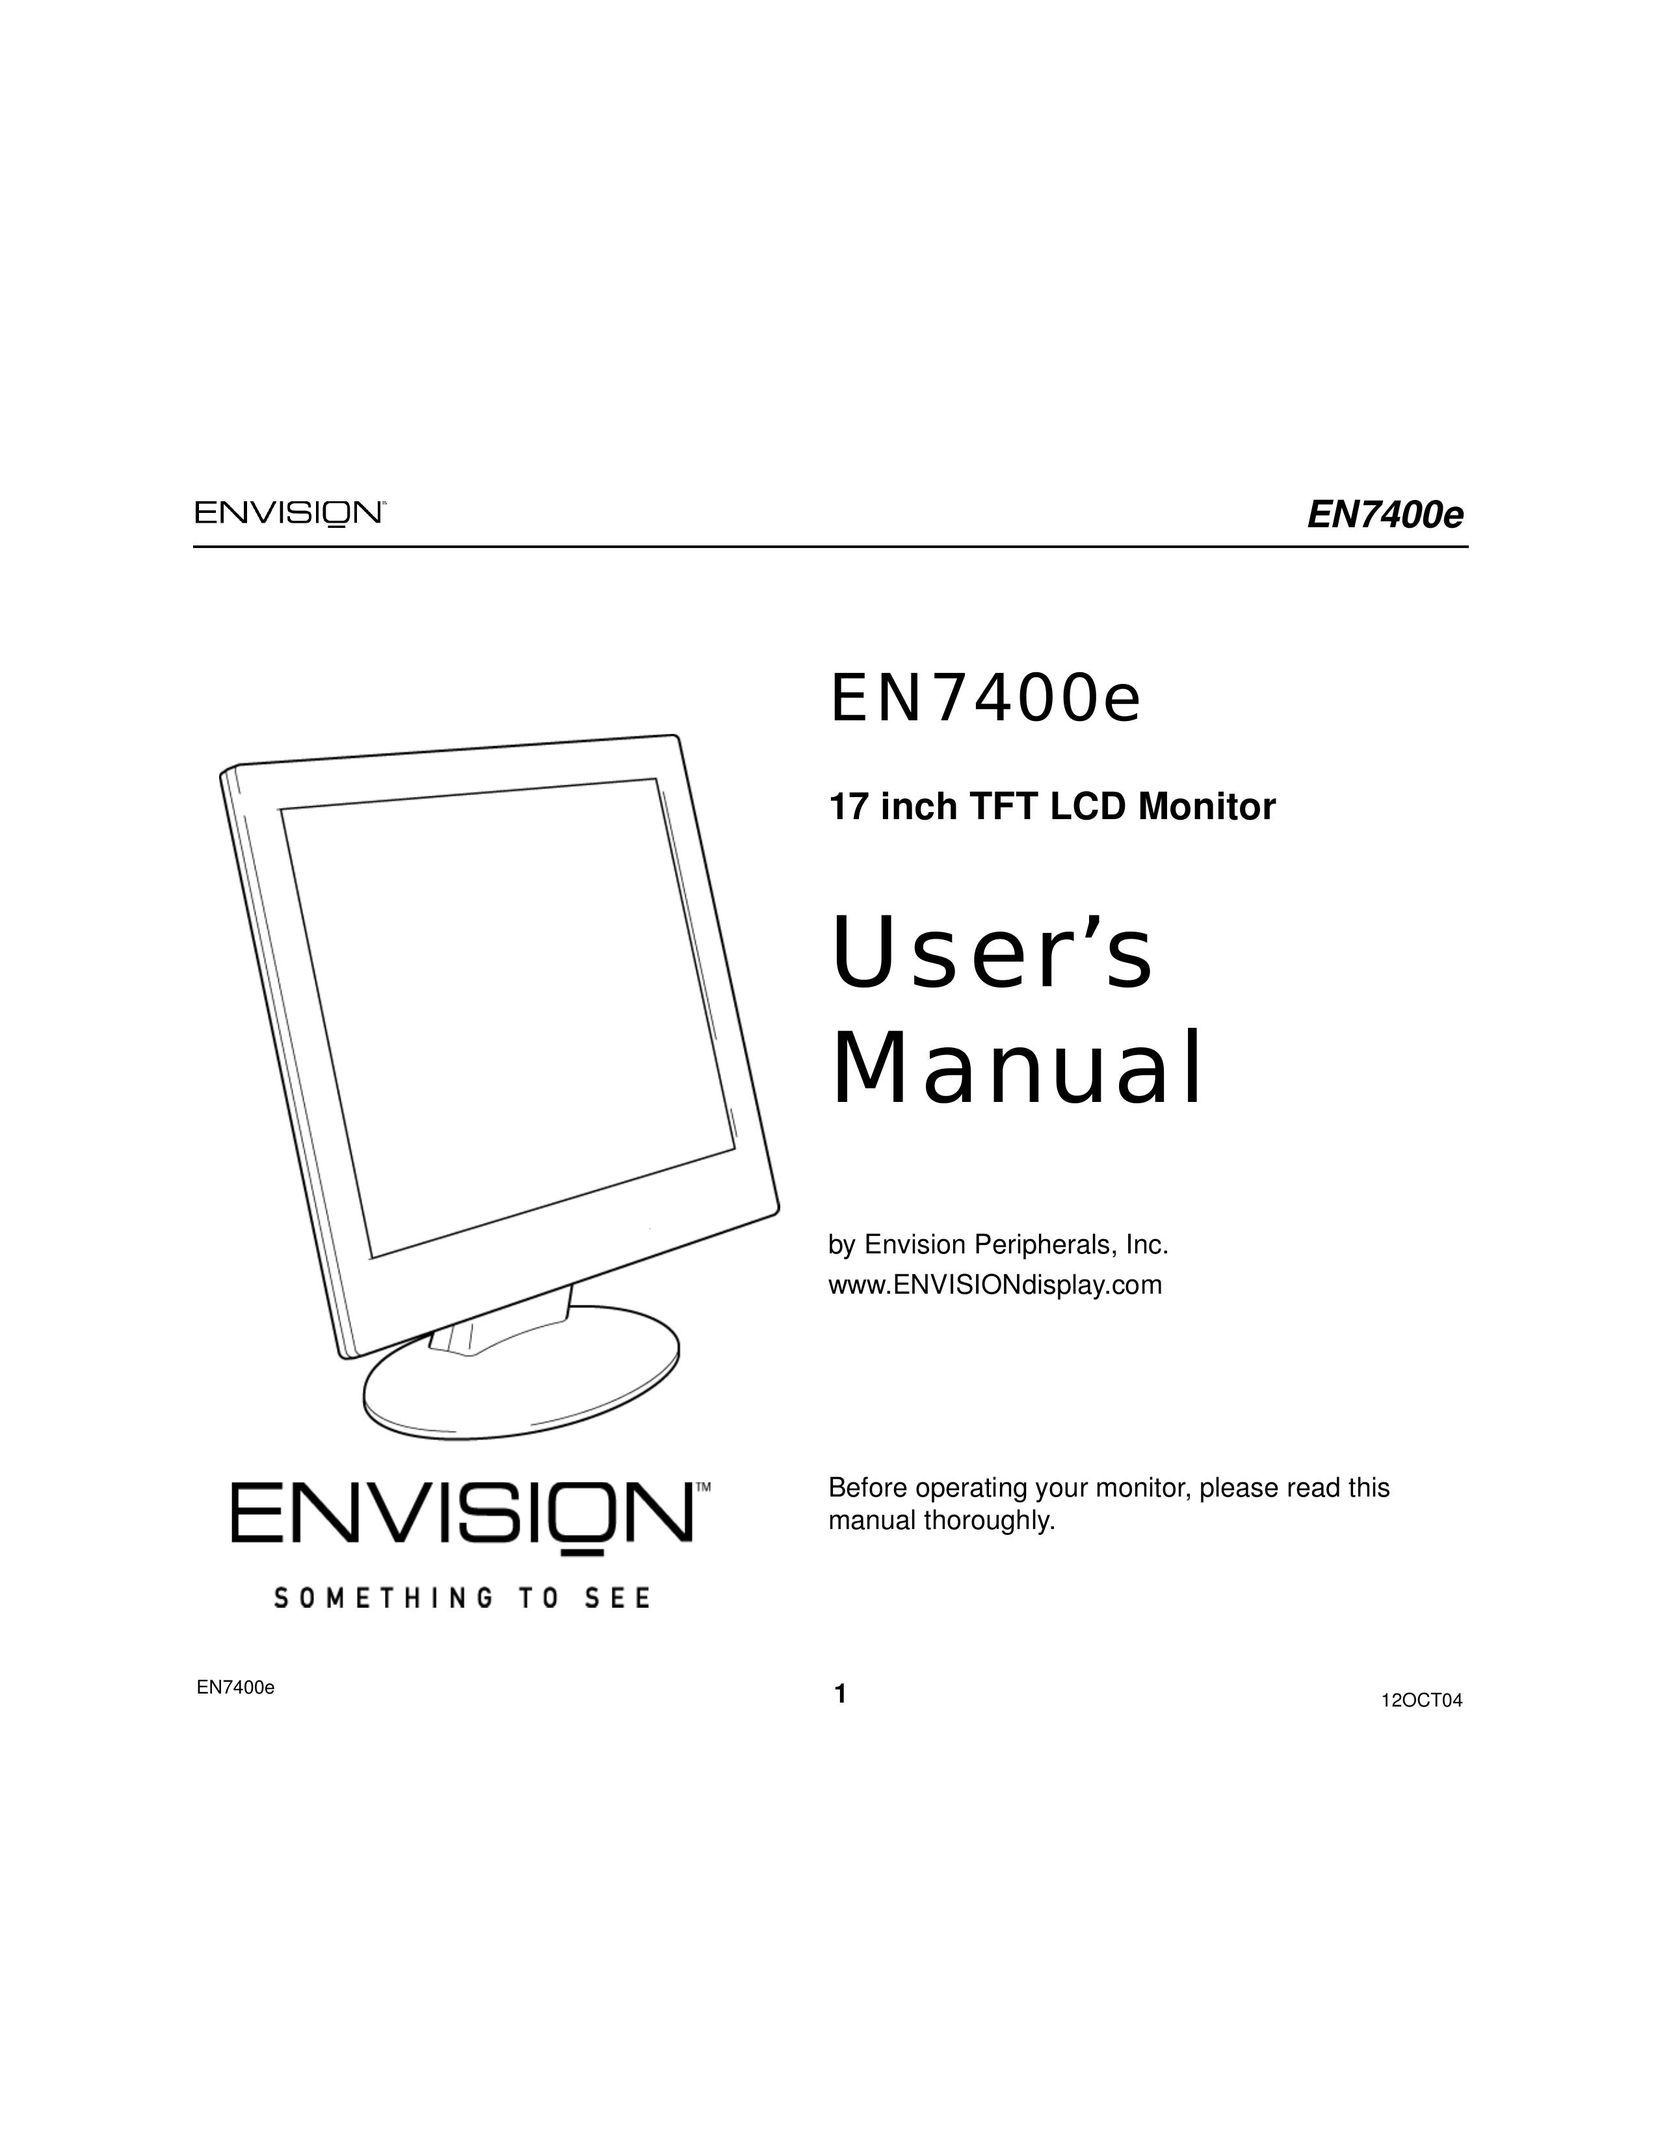 Envision Peripherals EN7400e Computer Monitor User Manual